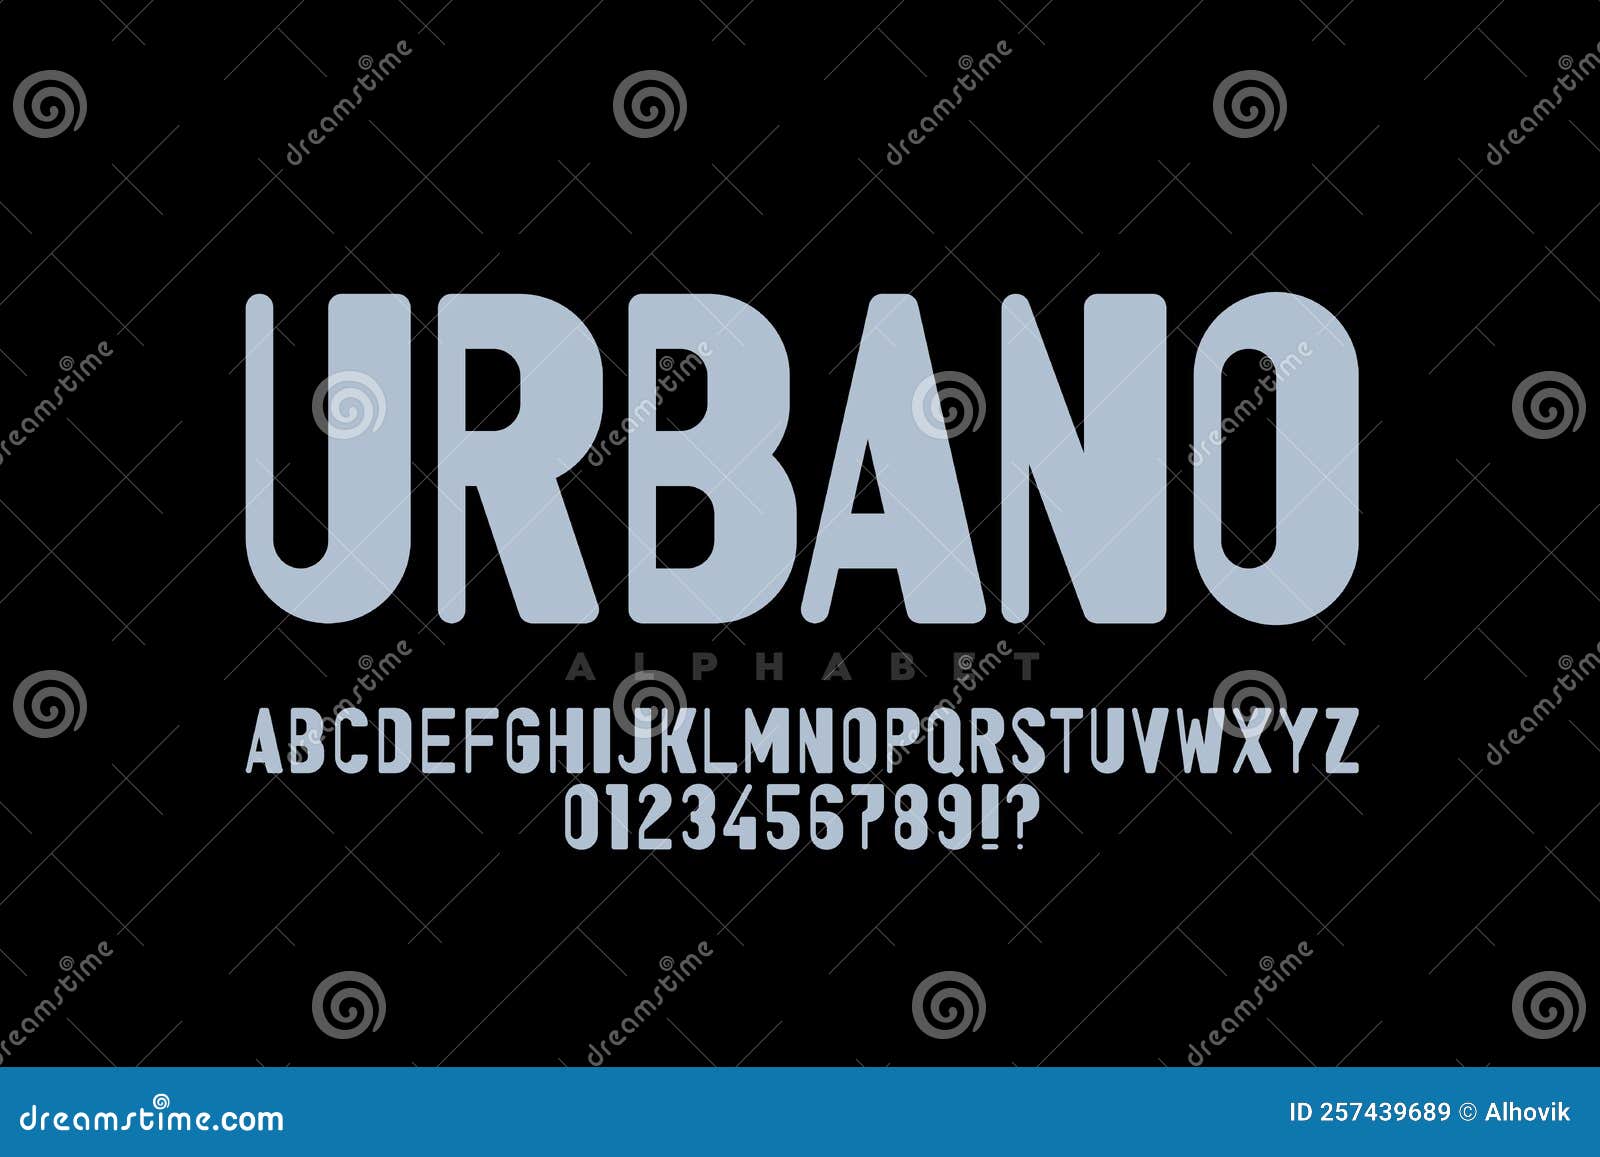 urbano font